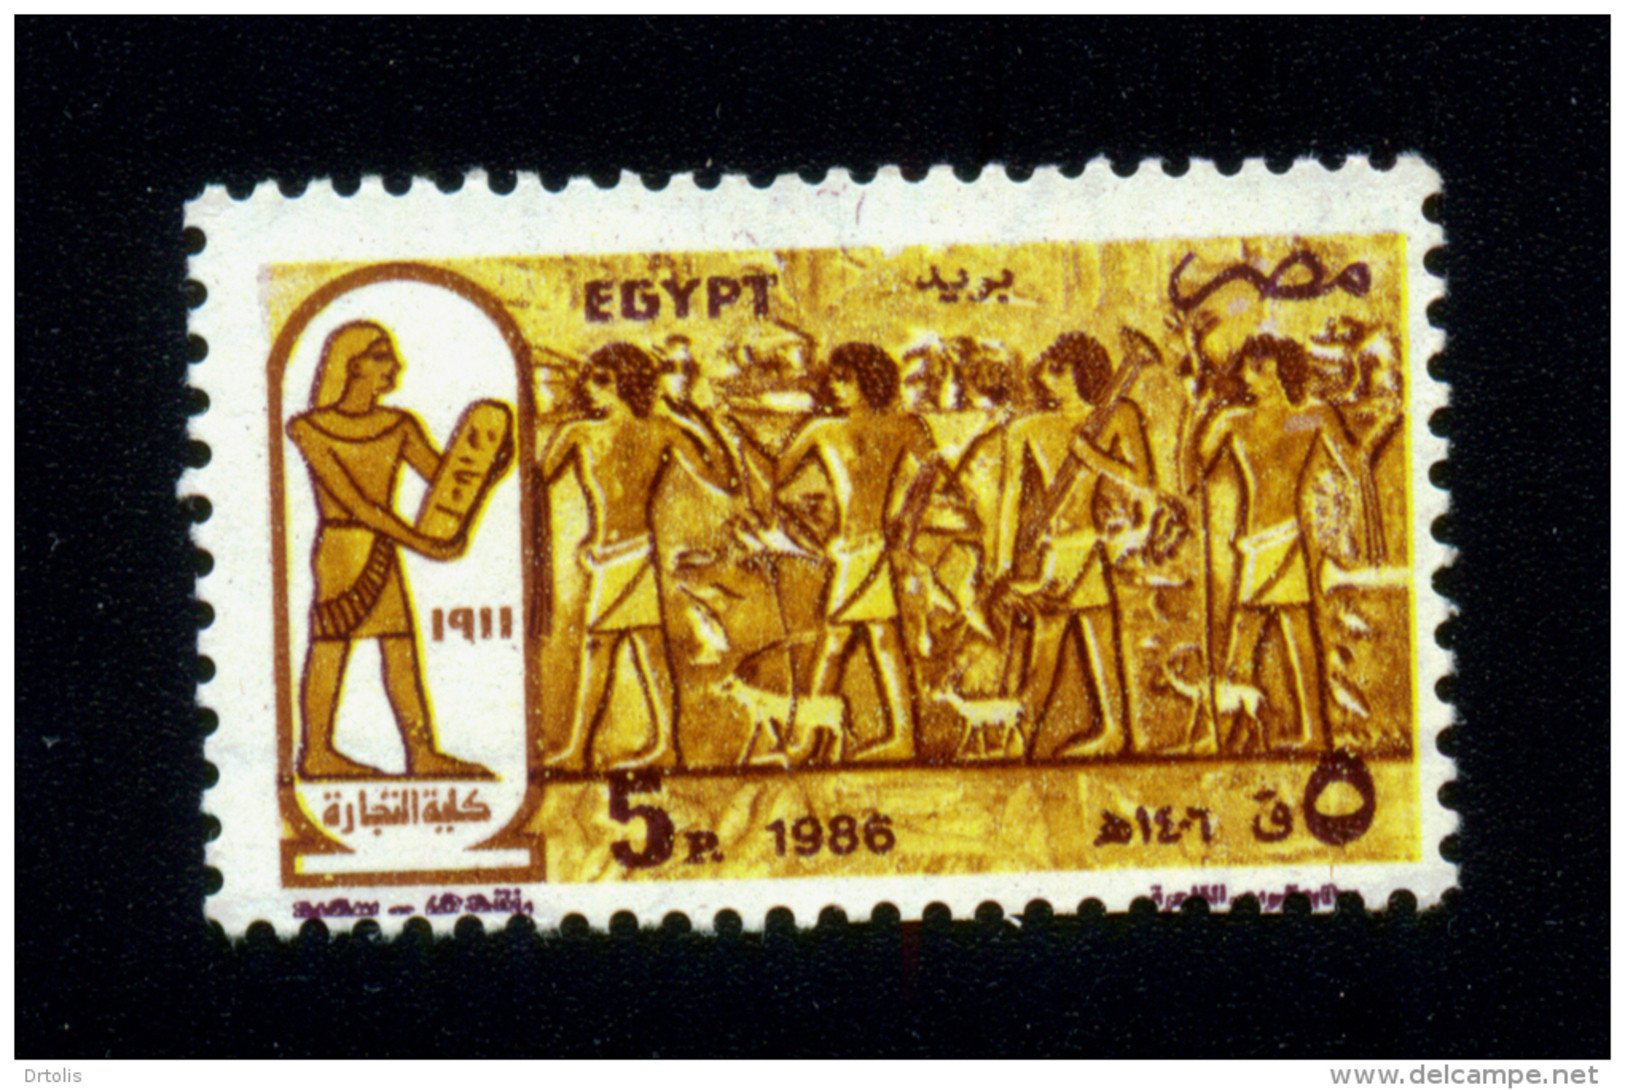 EGYPT / 1986 / FACULTY OF COMMERCE ; CAIRO UNIVERSITY / TOMB PAINTING ( BTAHHOTTEB ) ; SAKKARA / MNH / VF - Ongebruikt